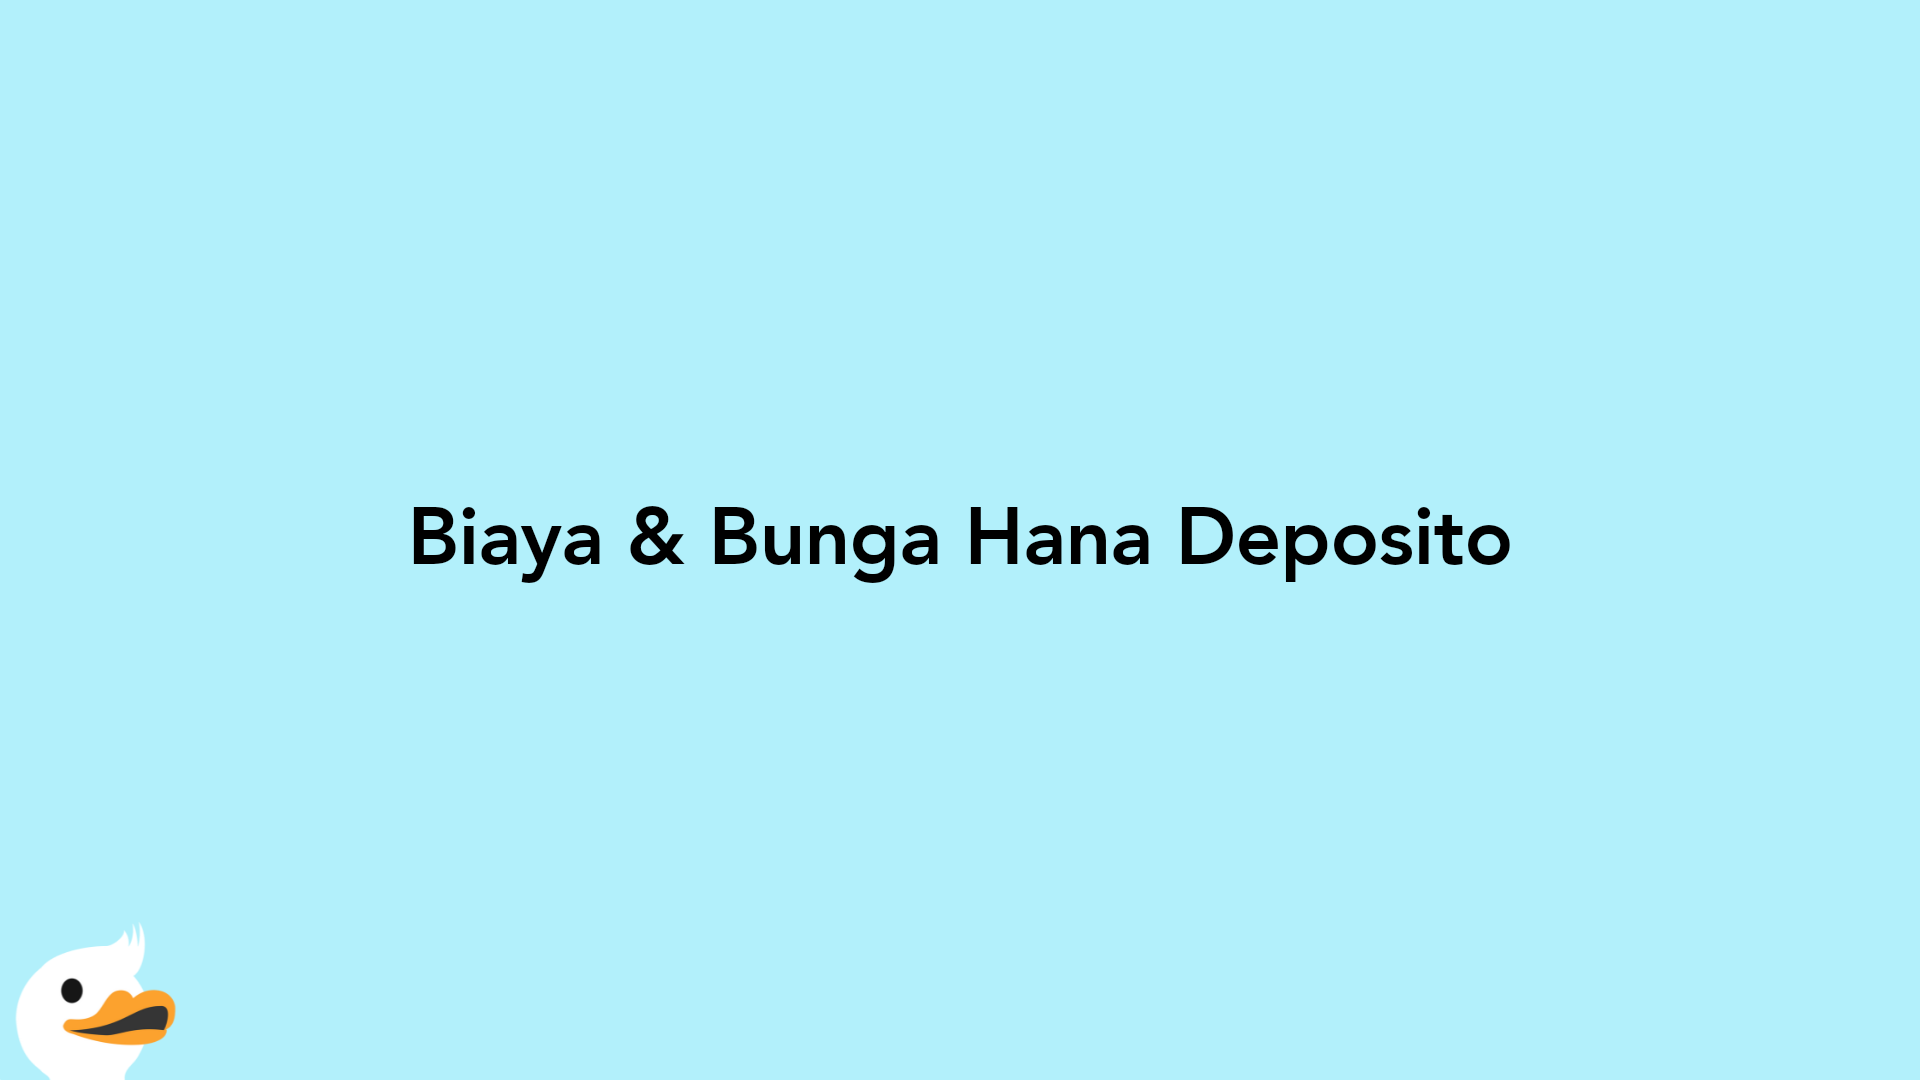 Biaya & Bunga Hana Deposito